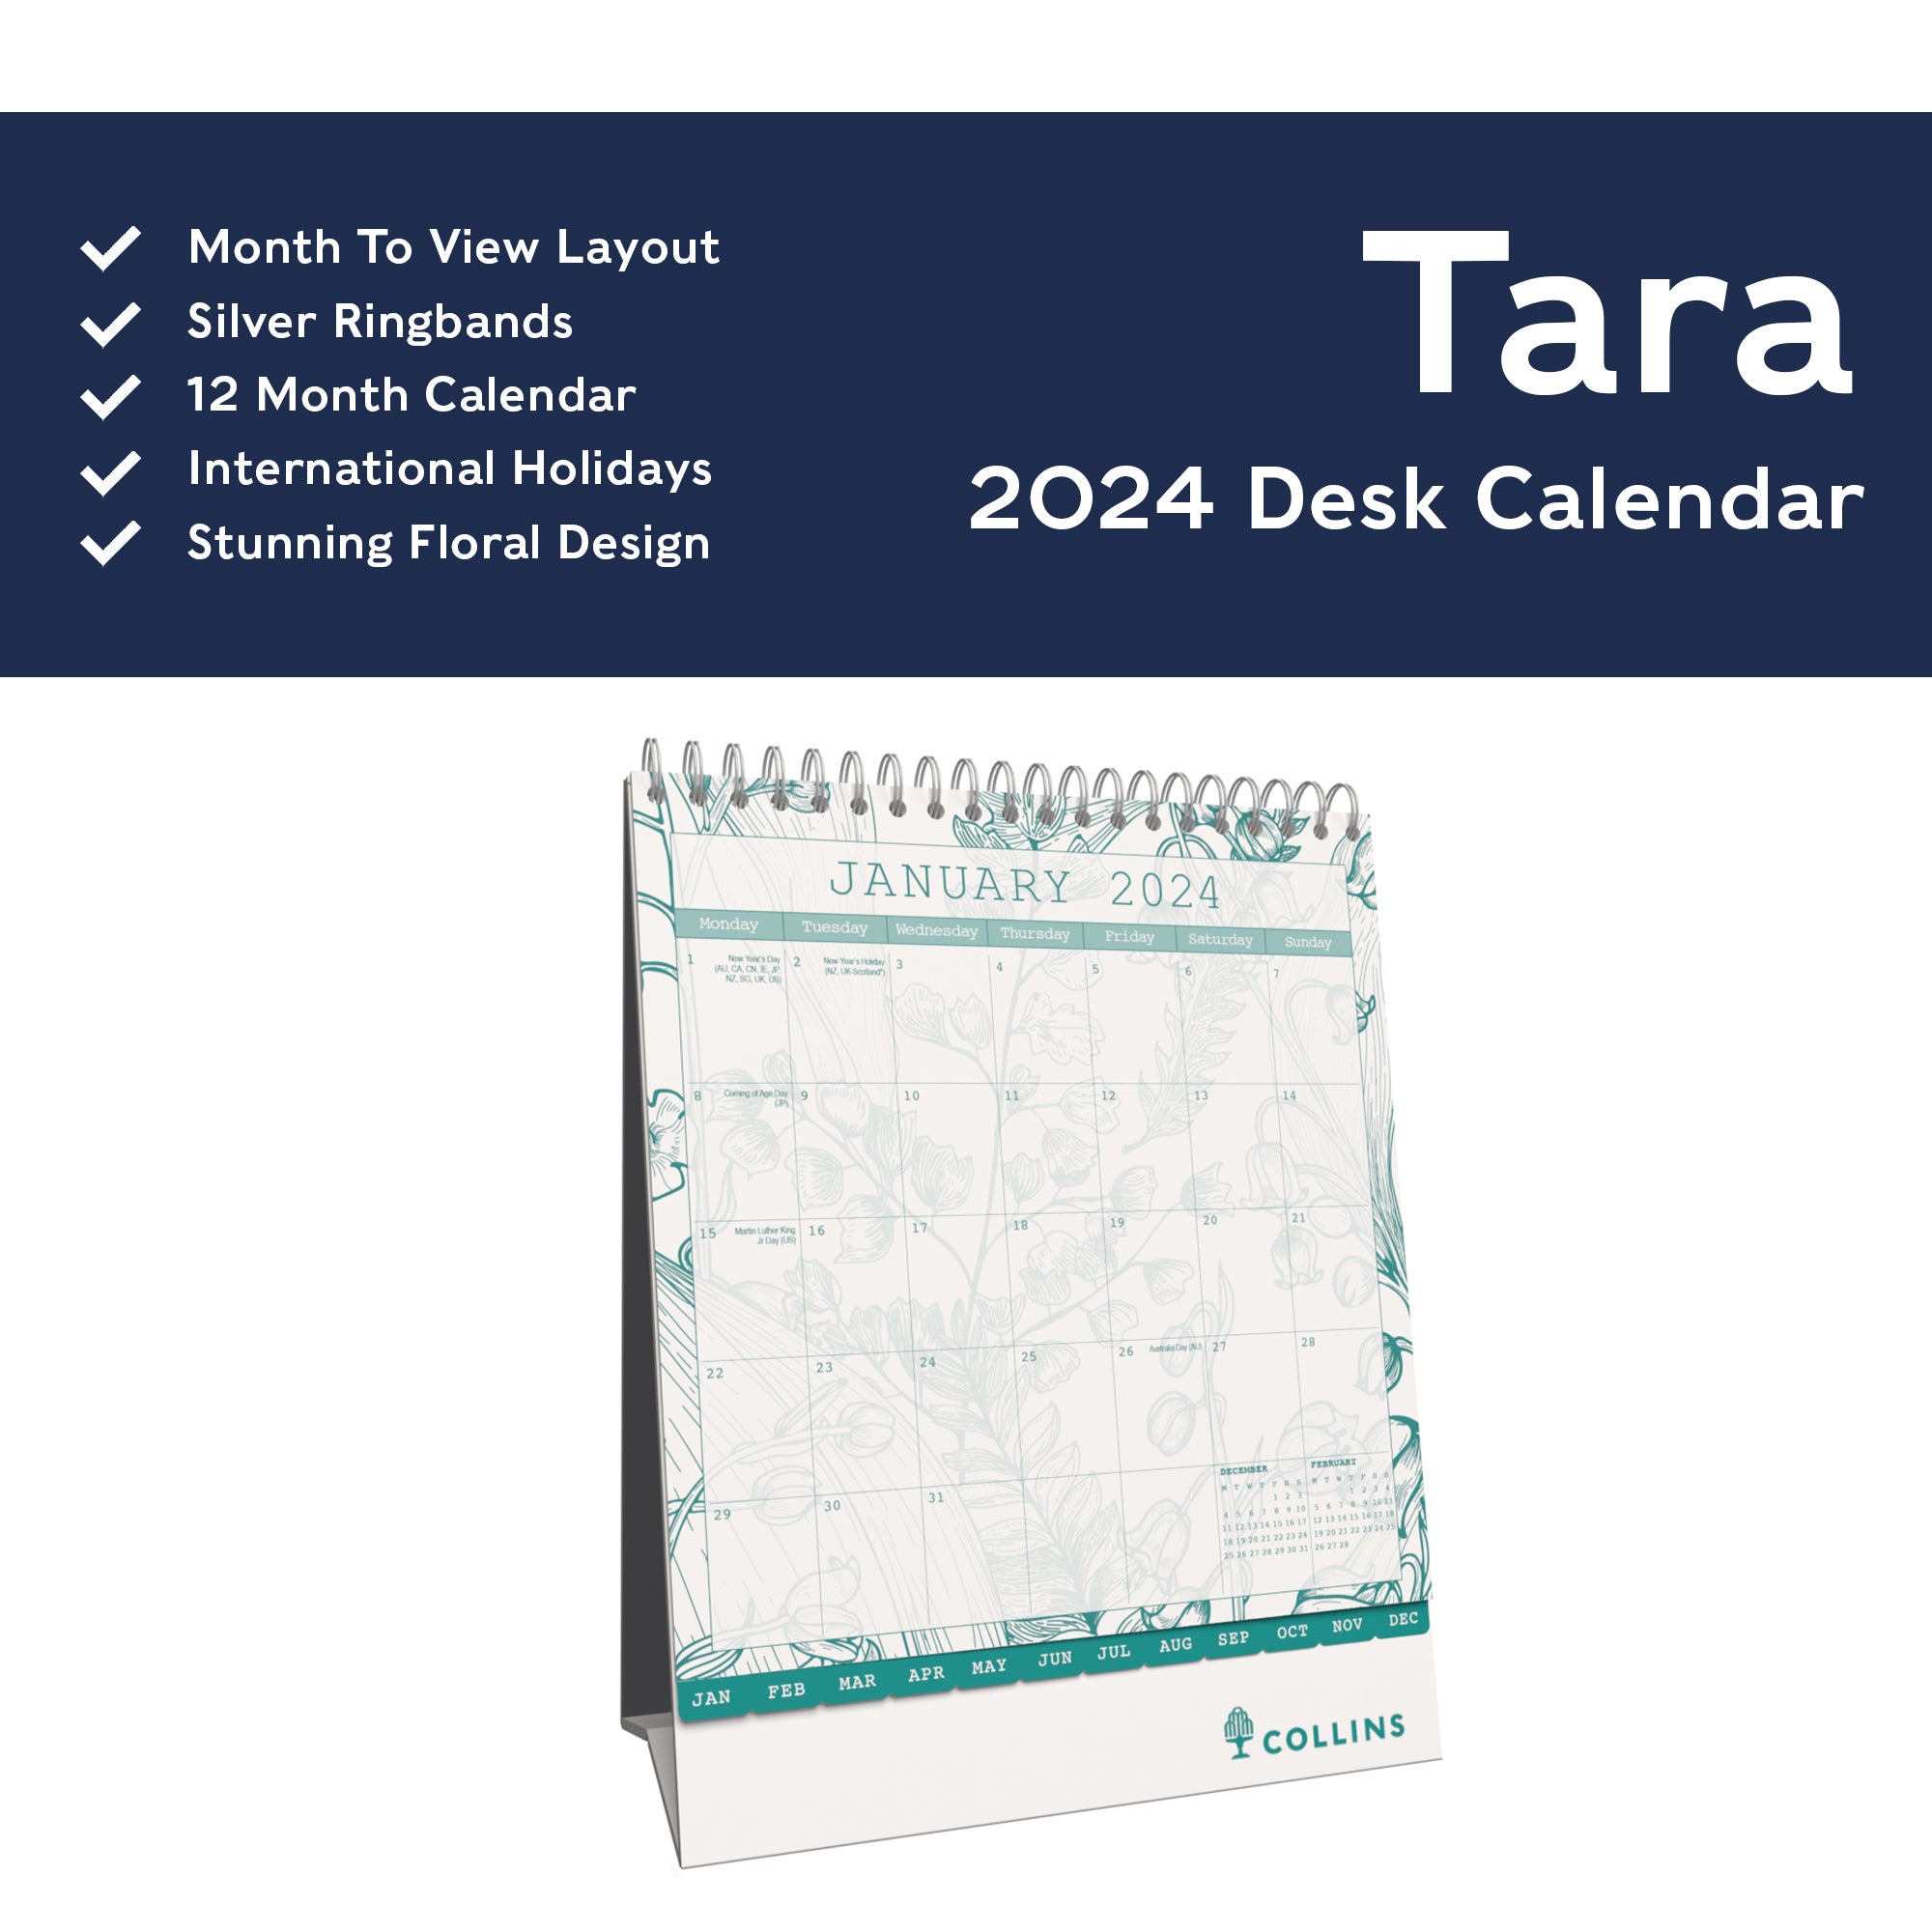 Tara Desktop Calendar 2024 - Month to View